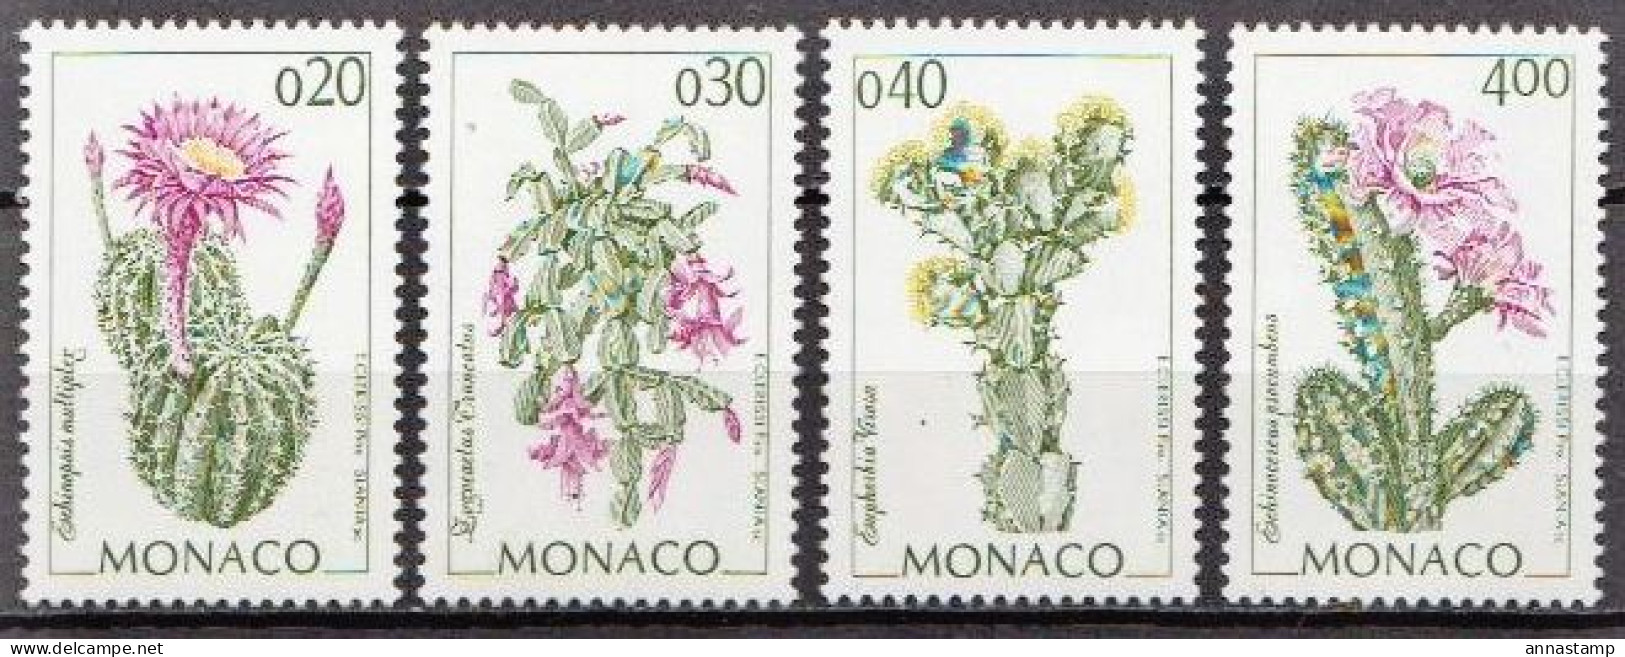 Monaco MNH Set - Cactus